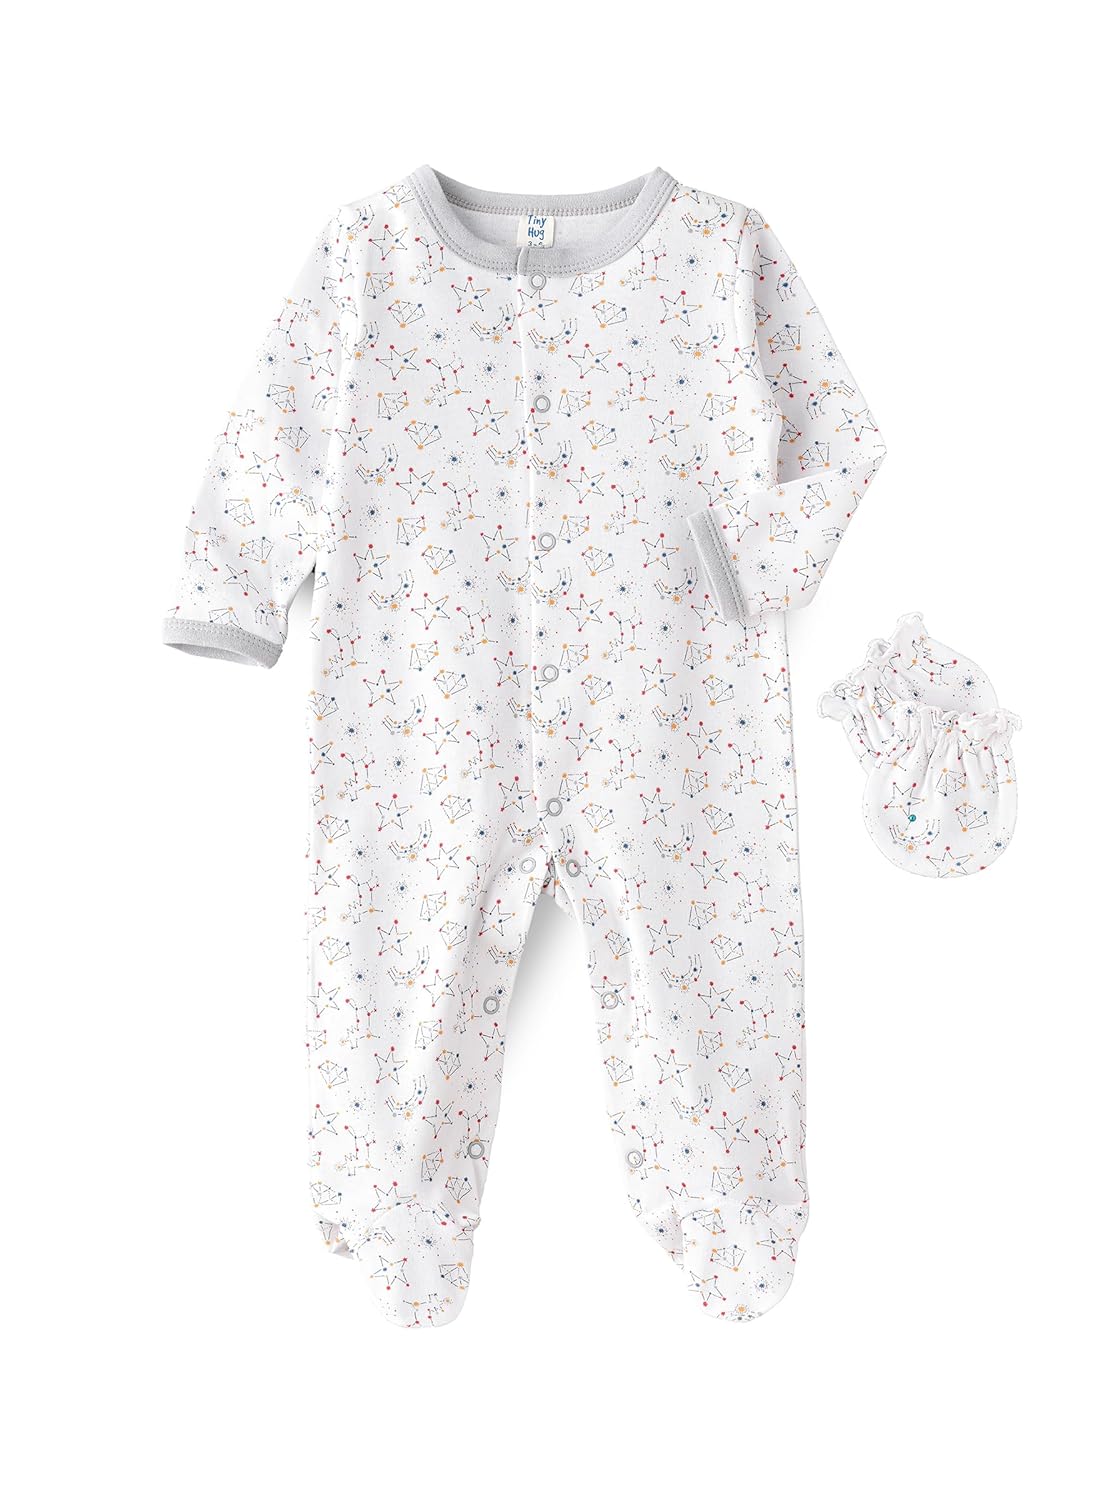 Tiny Hug Baby Sleep Suit with Mittens - Moons & Stars - Laadlee